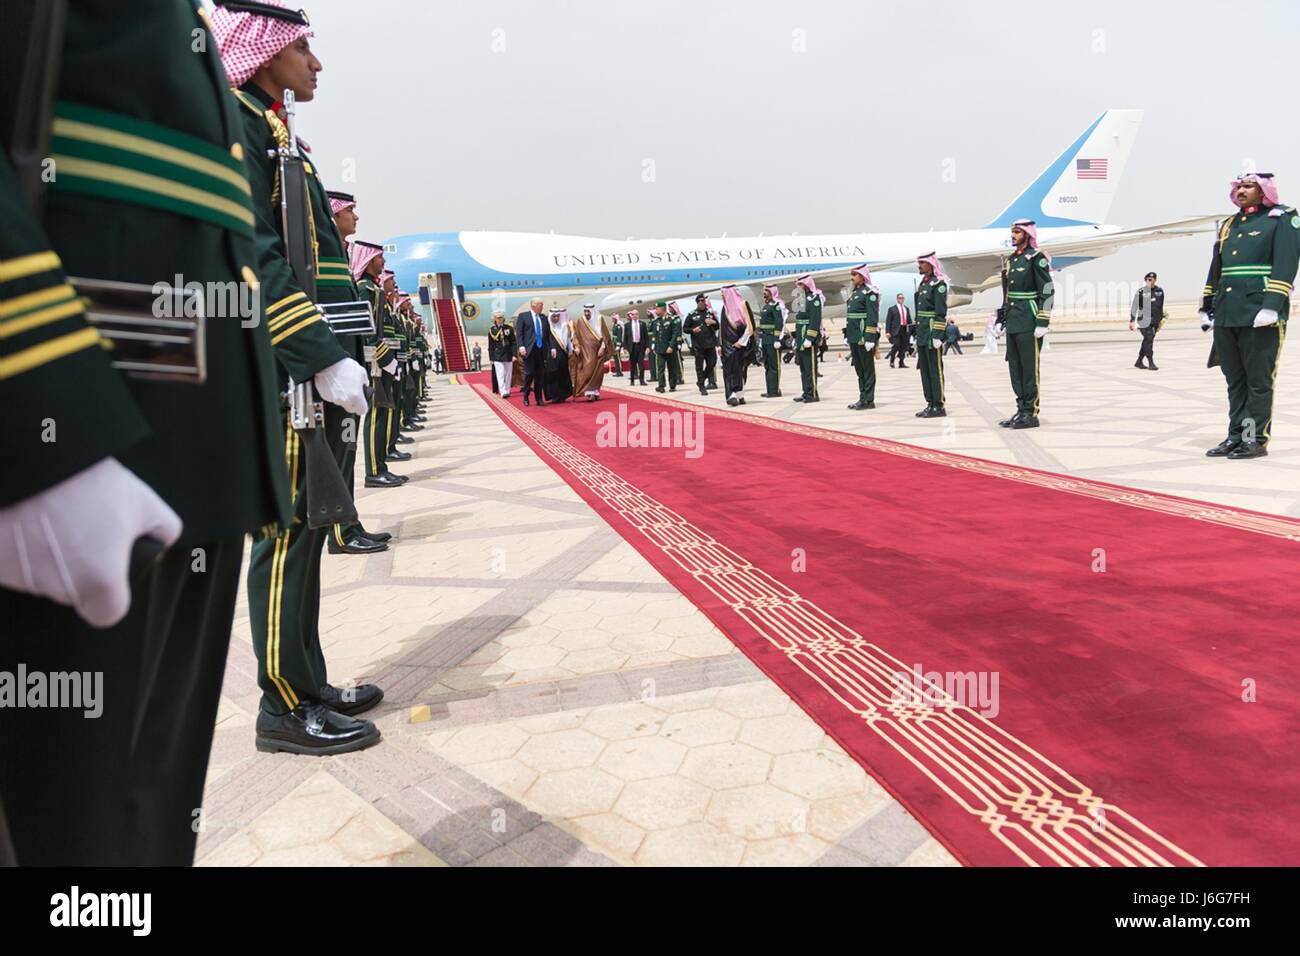 U.S. President Donald Trump is escorted by Saudi King Salman bin Abdulaziz Al Saud during arrival ceremonies at King Khalid International Airport May 20, 2017 in Riyadh, Saudi Arabia. Stock Photo